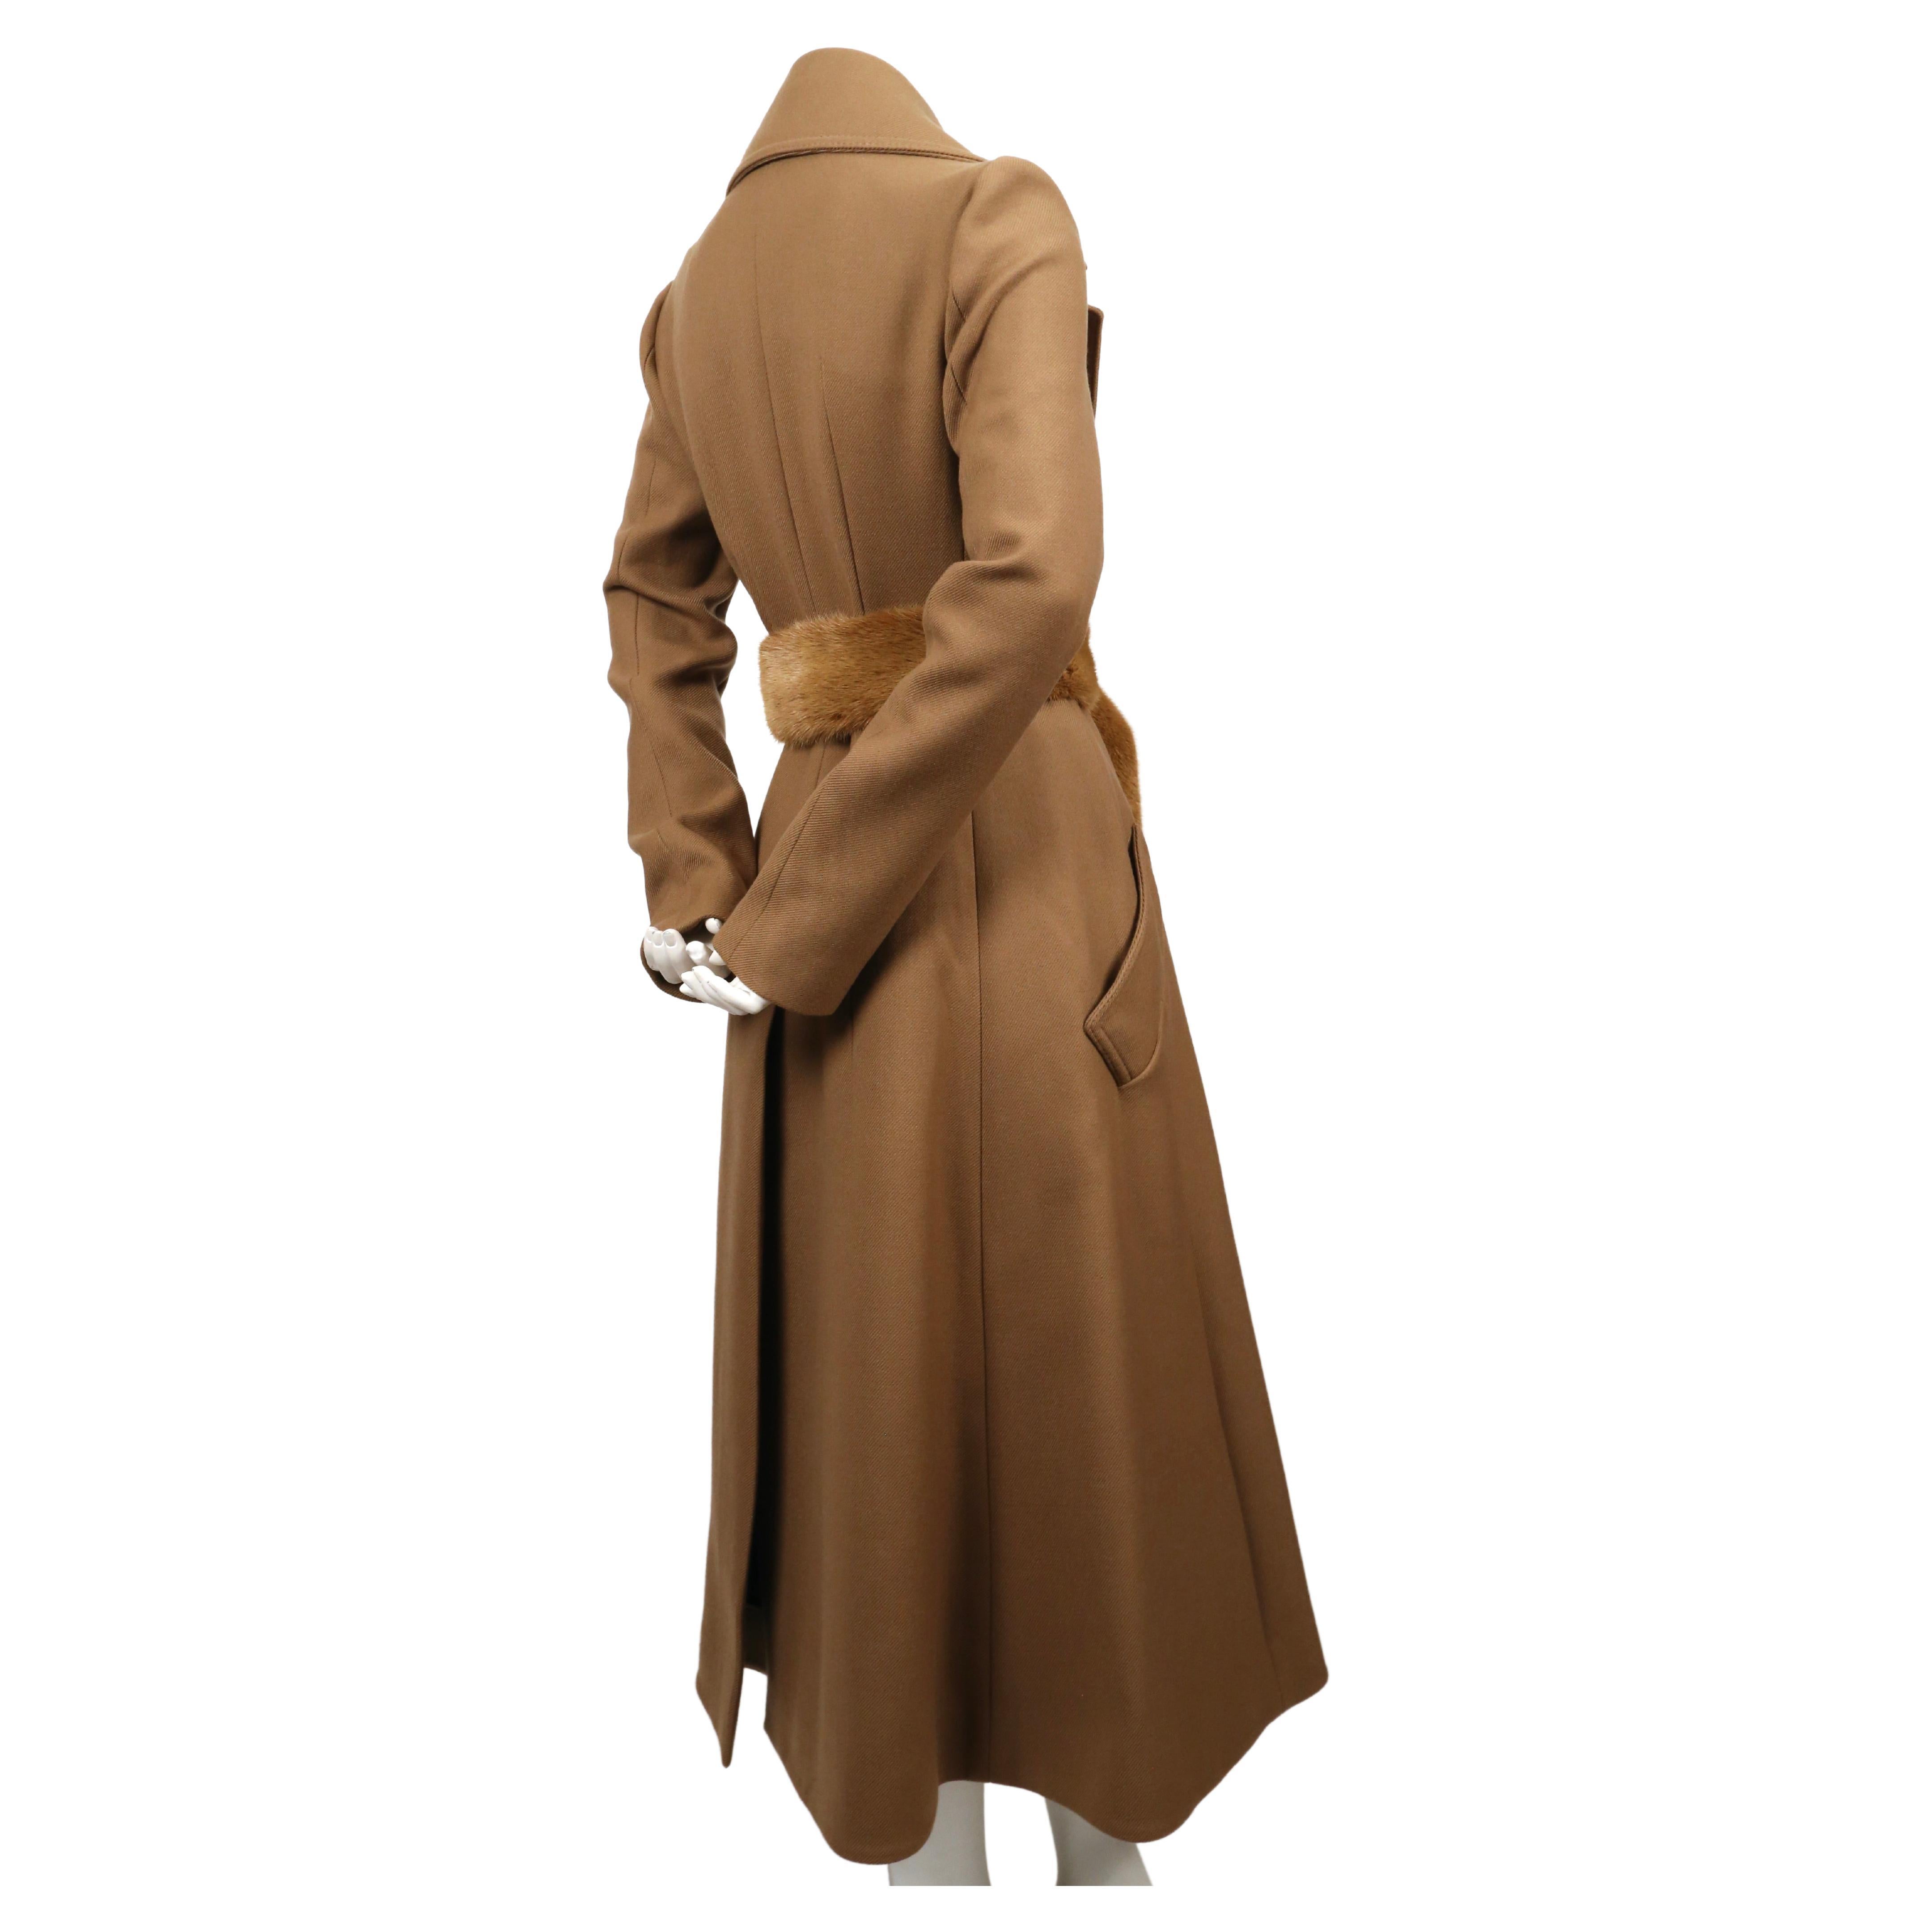 Women's unworn 2014 CELINE fitted camel wool gabardine runway coat with mink fur belt